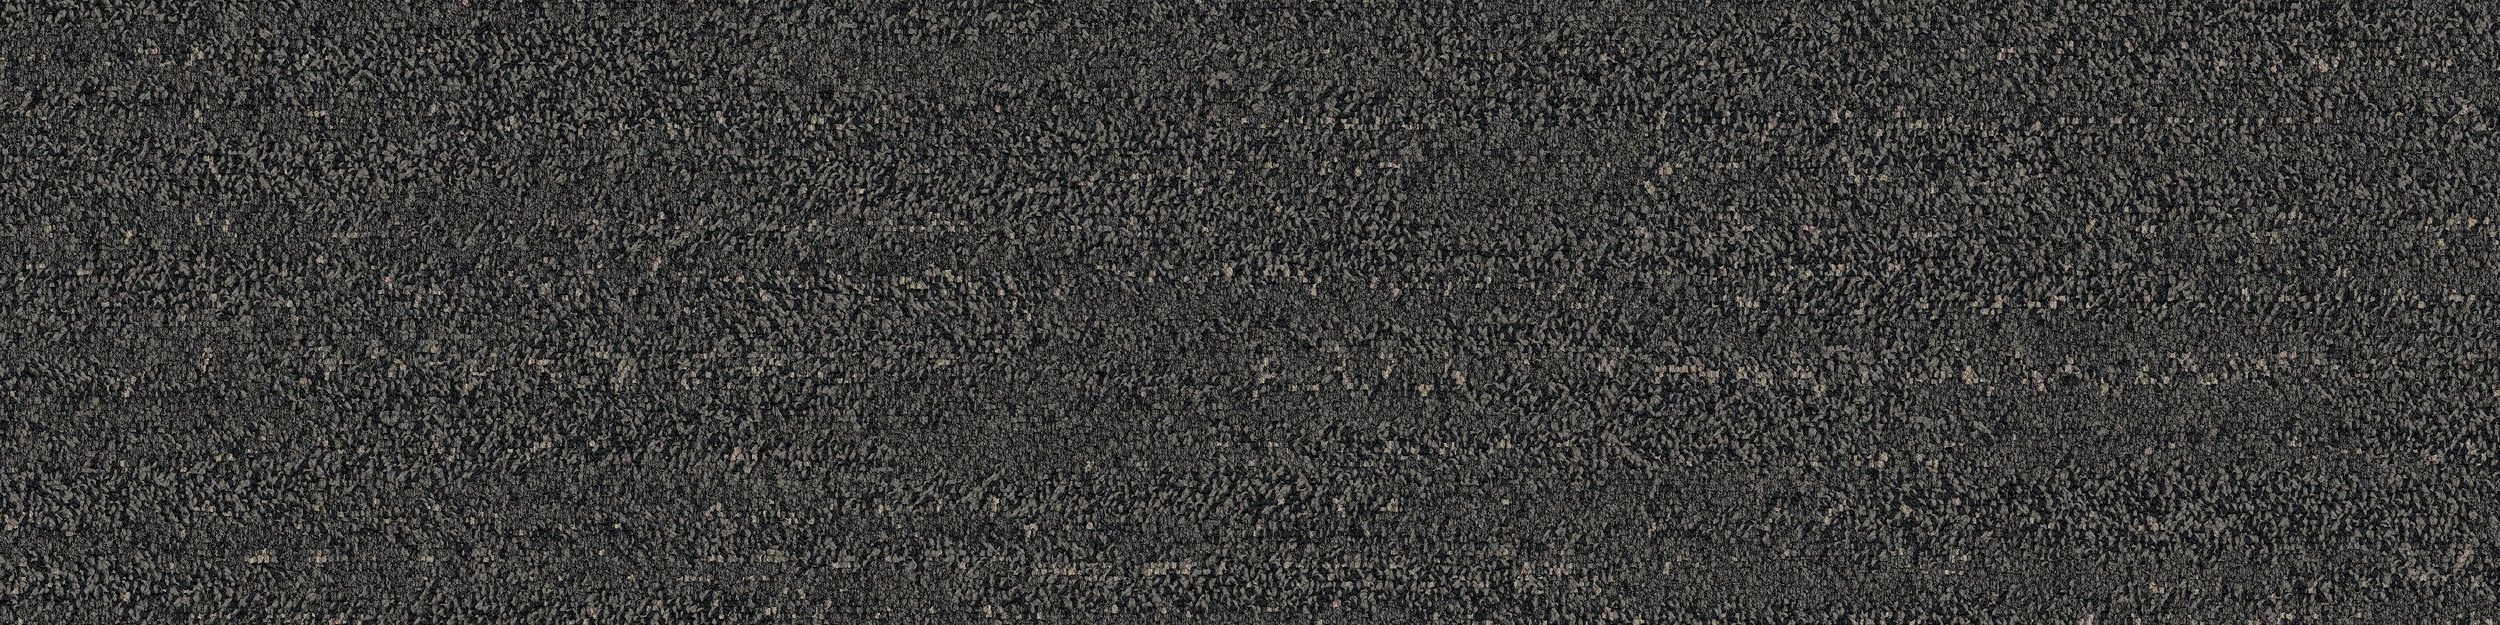 Rockland Road Carpet Tile In Charcoal Quarry imagen número 2